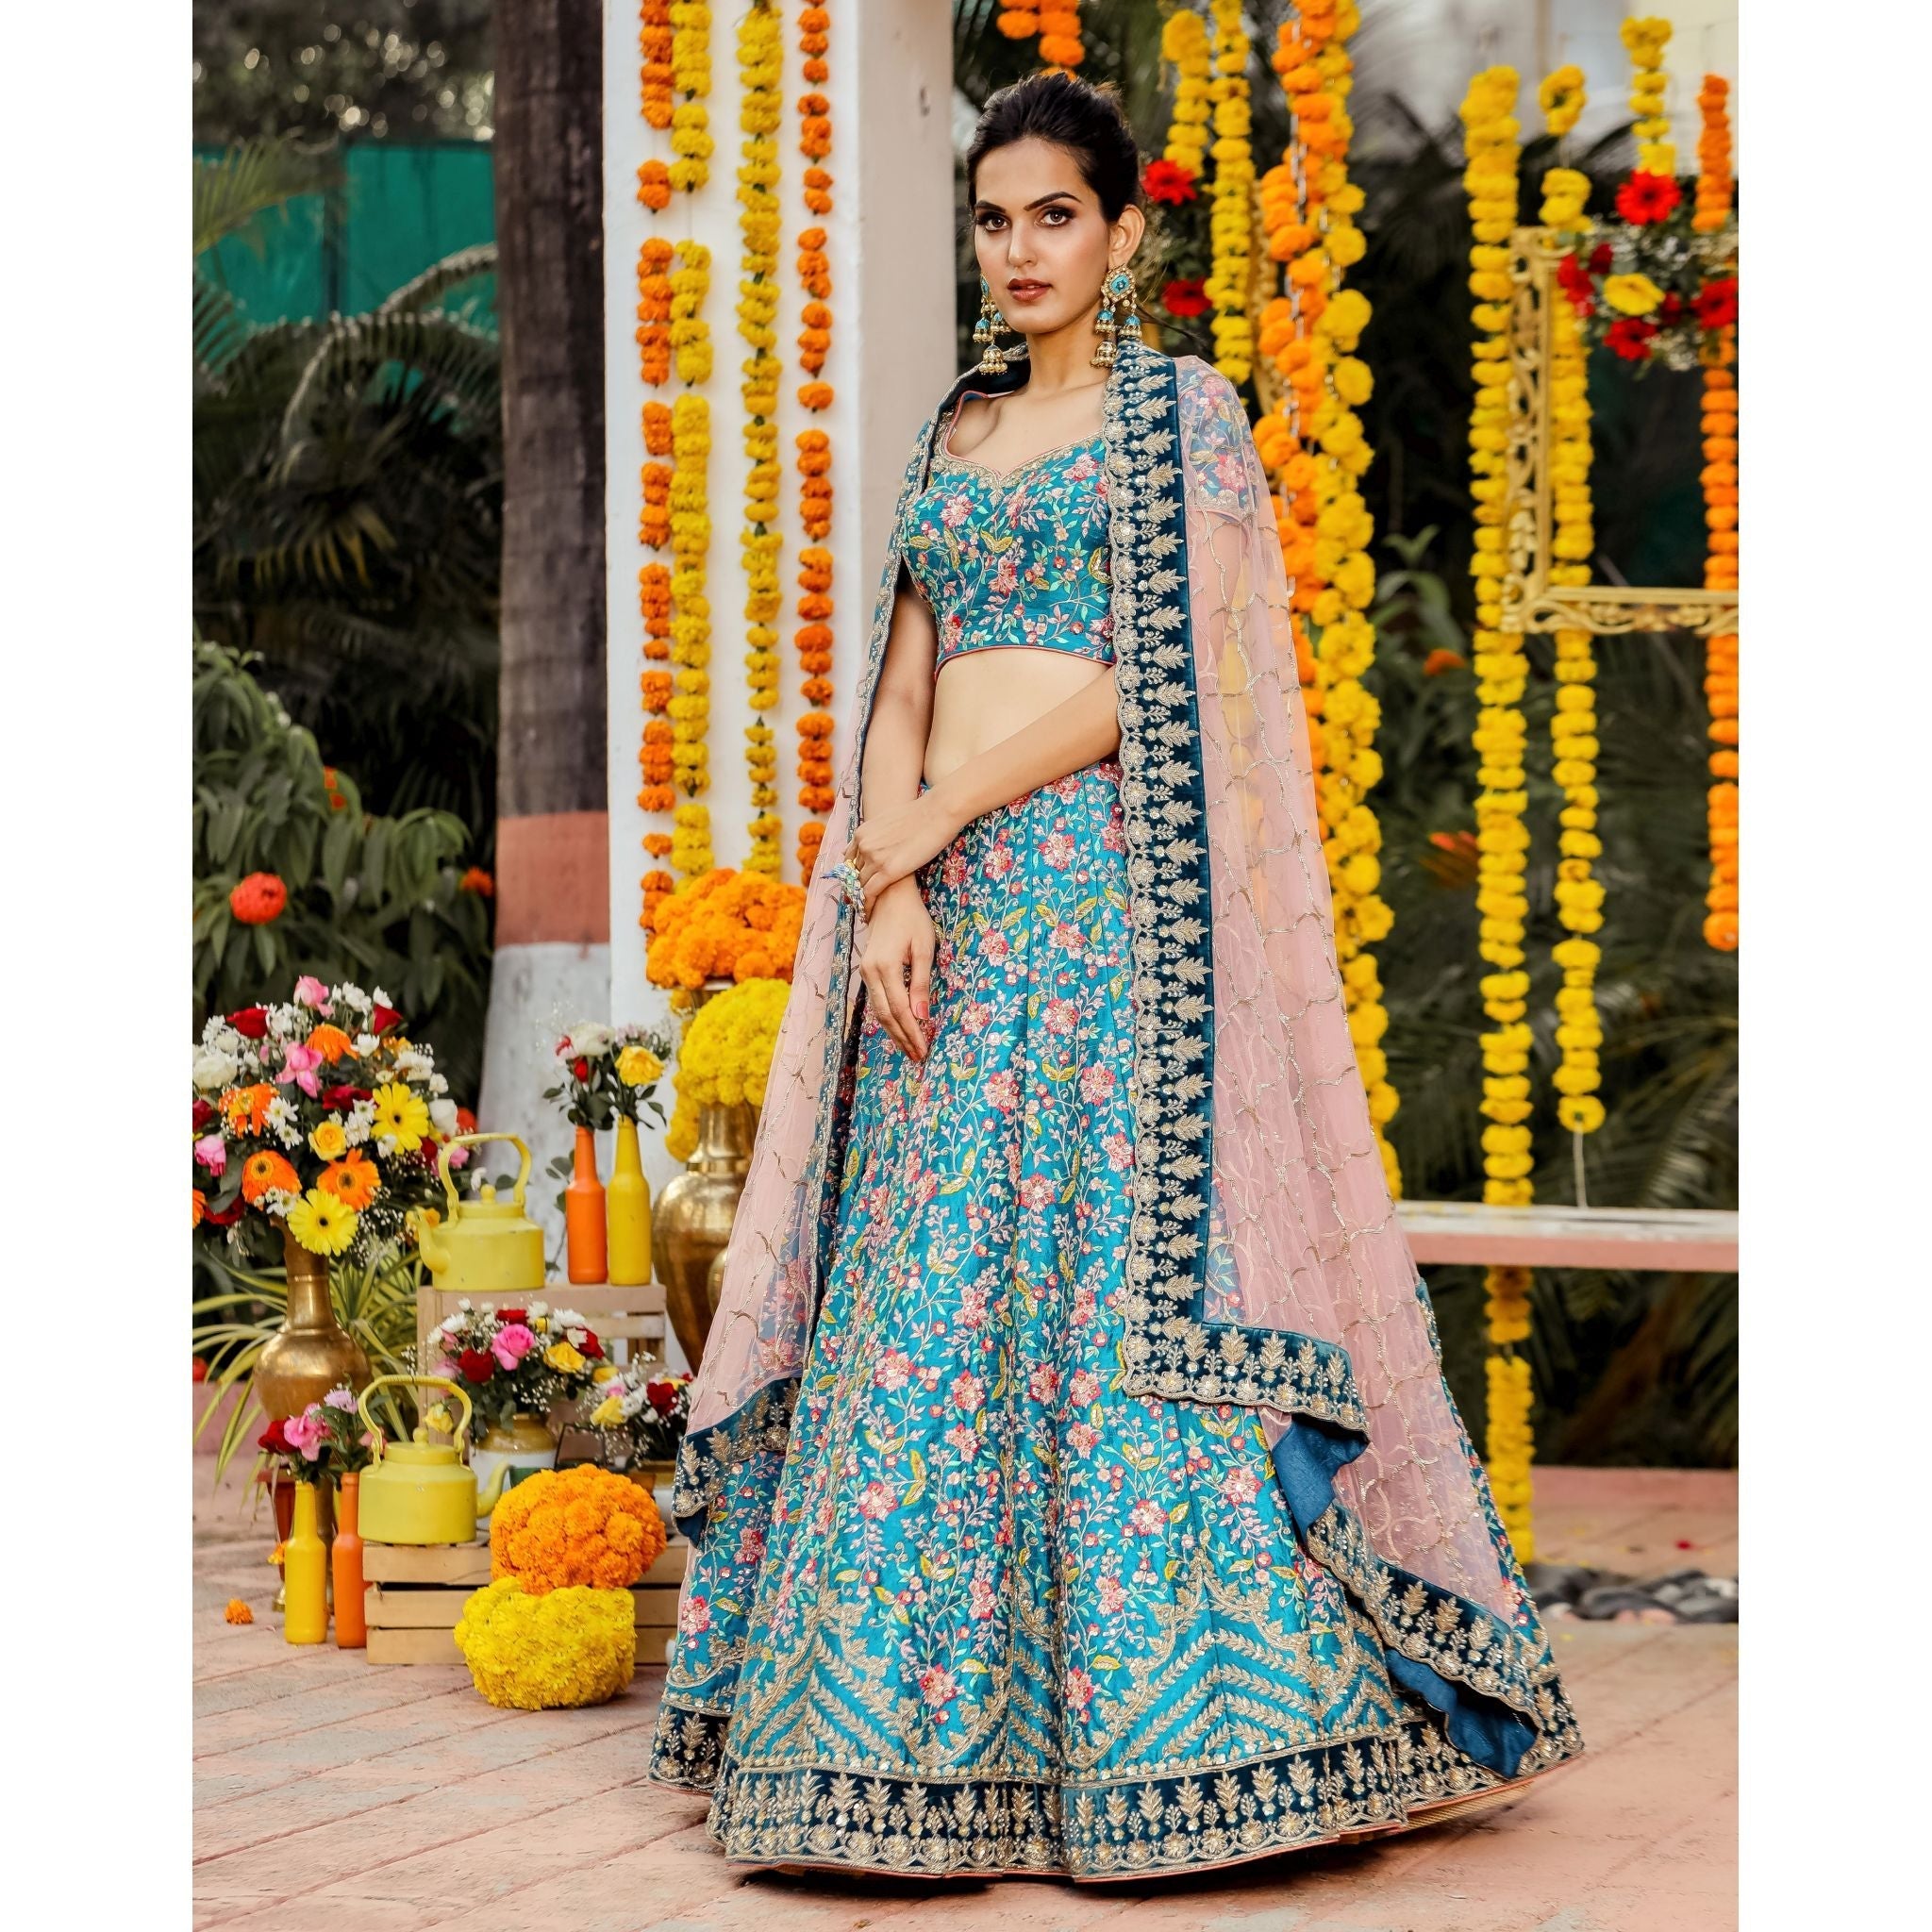 Cyan Blue Floral Lehenga Set - Indian Designer Bridal Wedding Outfit